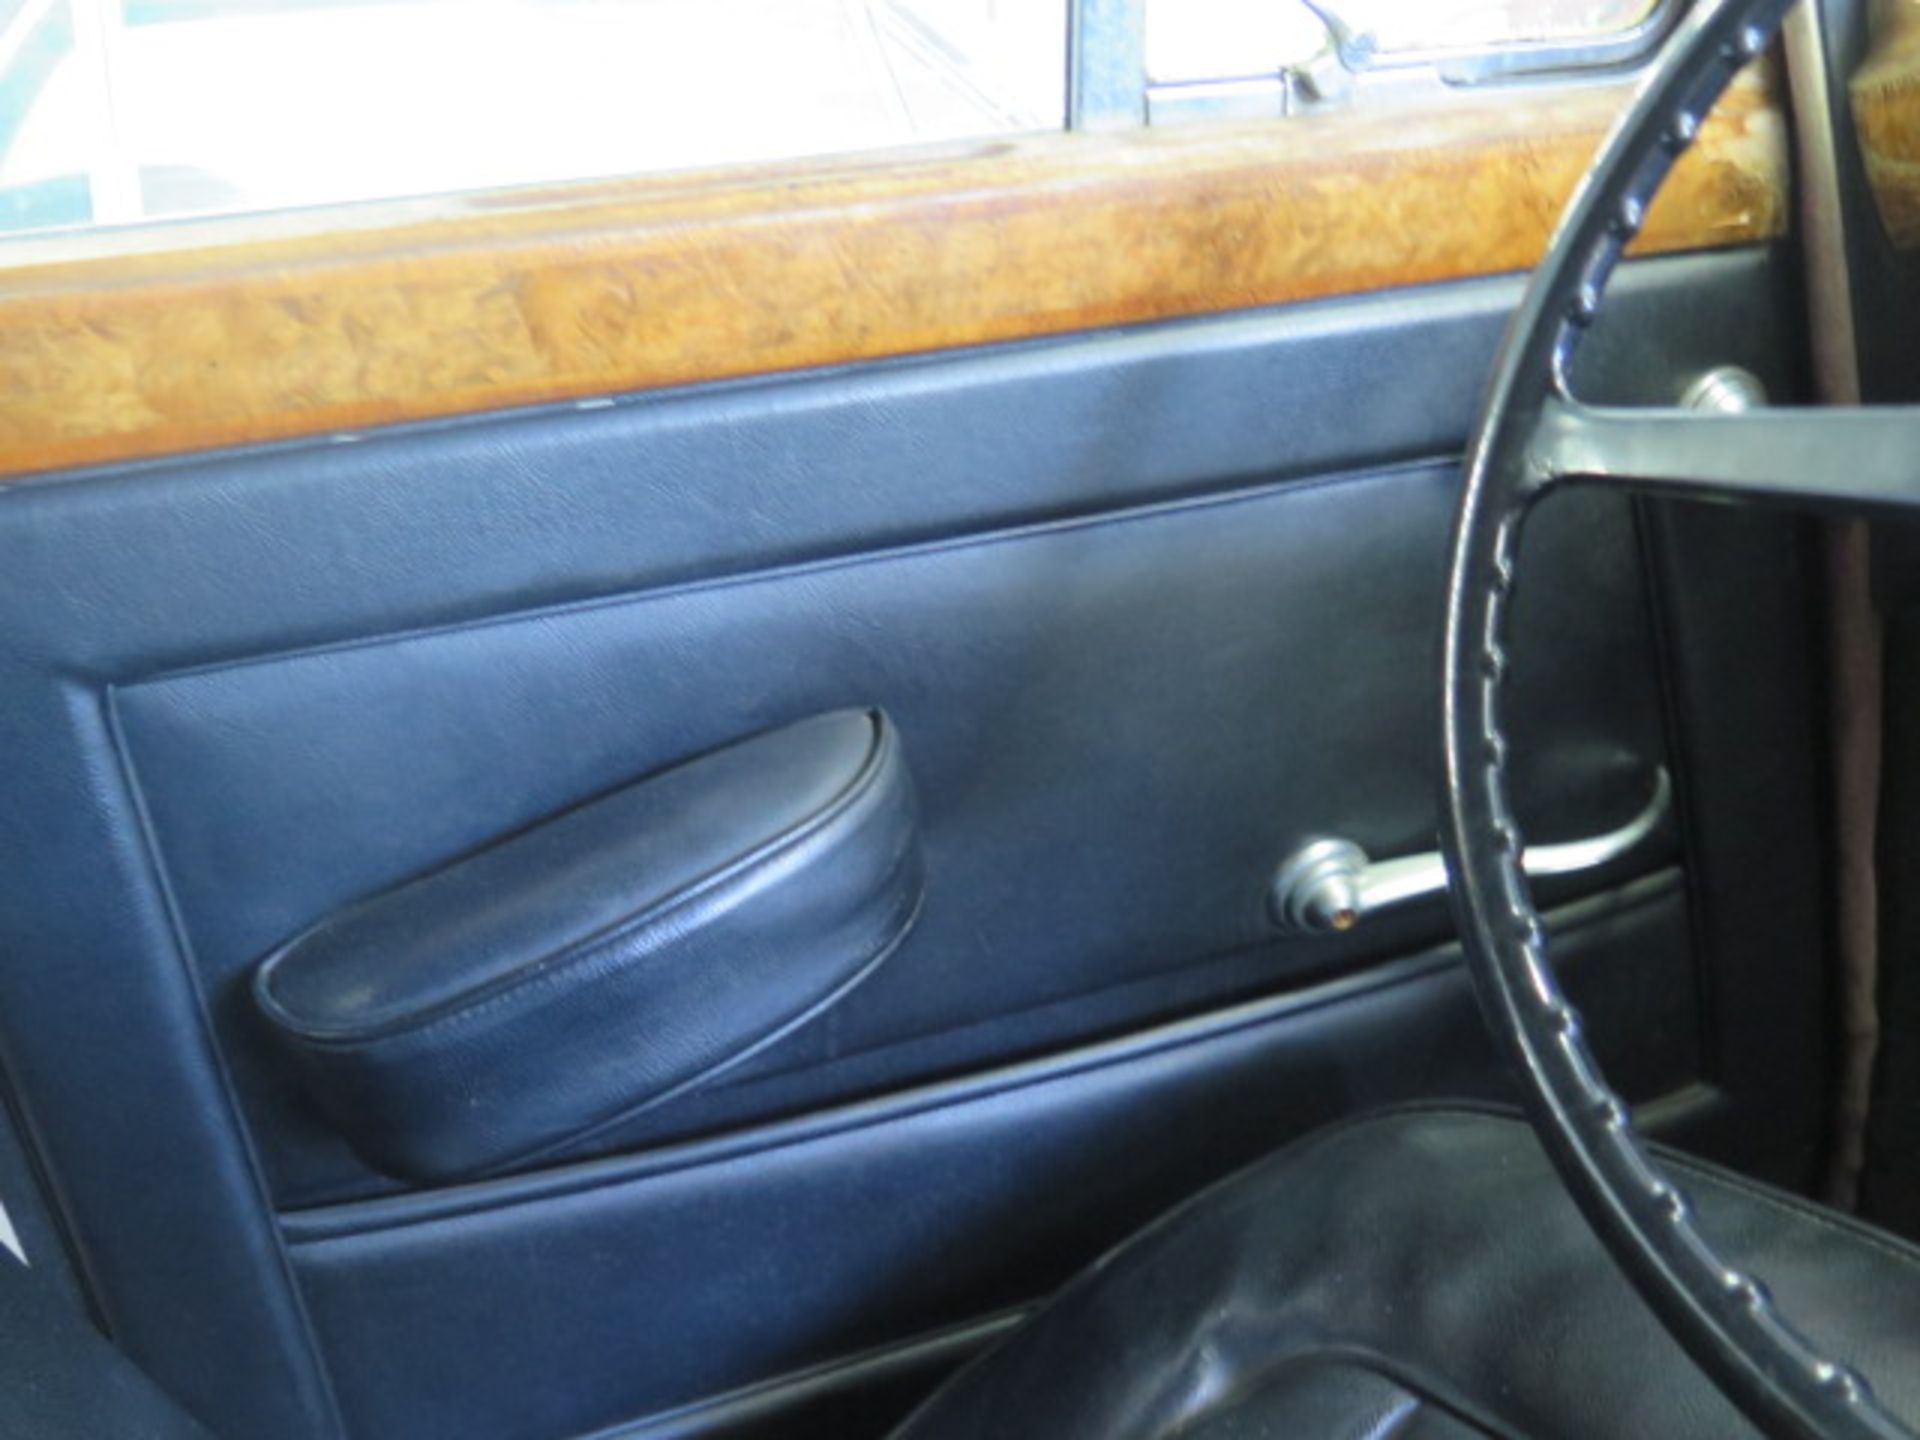 1952 Rolls Royce Silver Dawn Sedan Lics# 2DXP115 w/ Left Hand Steering, Gas, s/n S-78-C, SOLD AS IS - Image 21 of 38